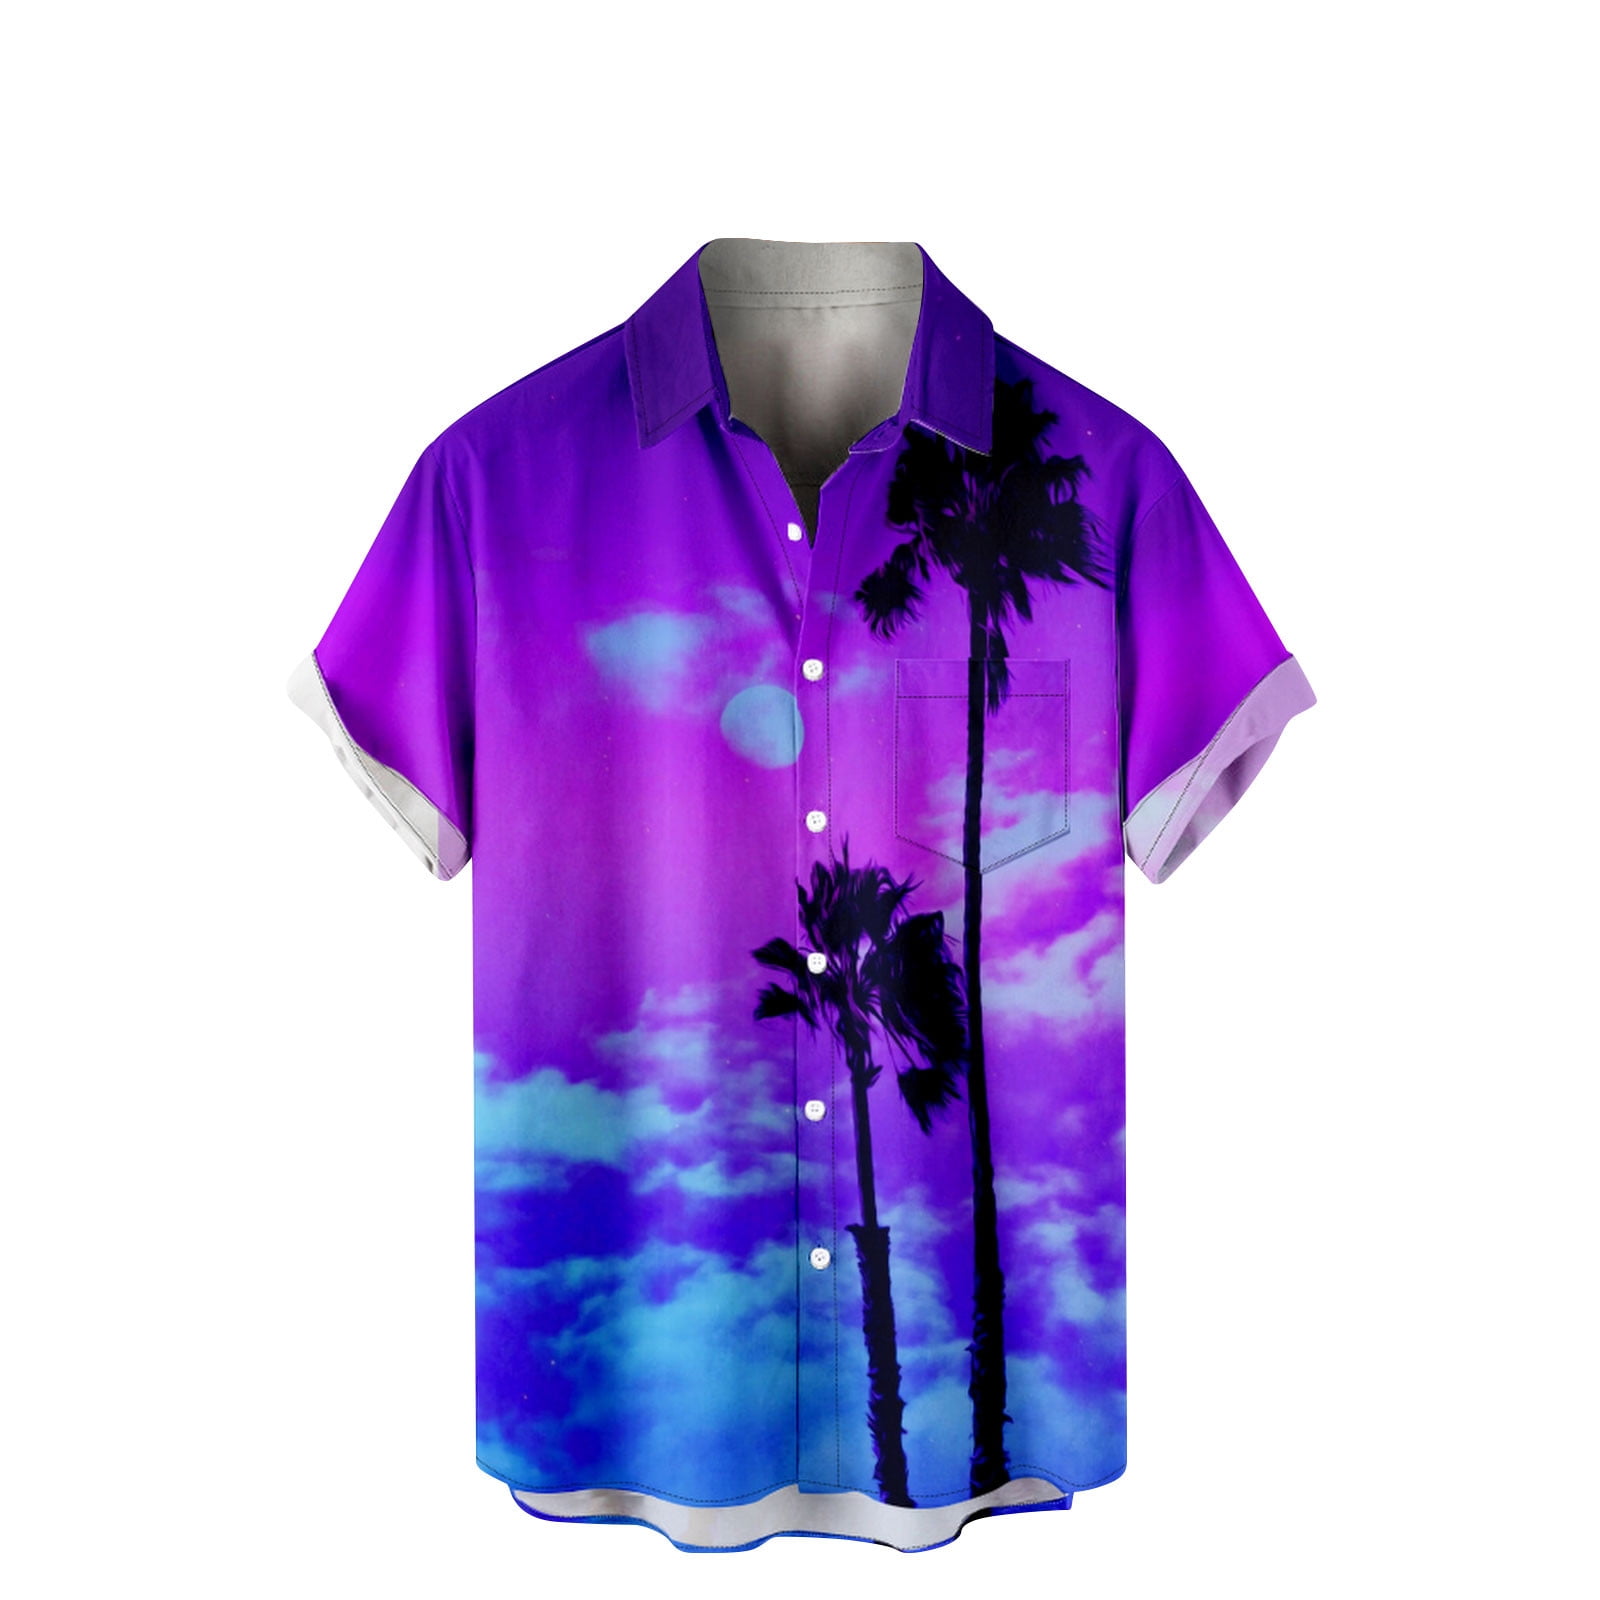 Hfyihgf Men's Hawaiian Shirt Relaxed-Fit Short Sleeves Tropocal Printed  Pocket Shirts Button Down Summer Beach Dress Shirts(Multicolor,M) 